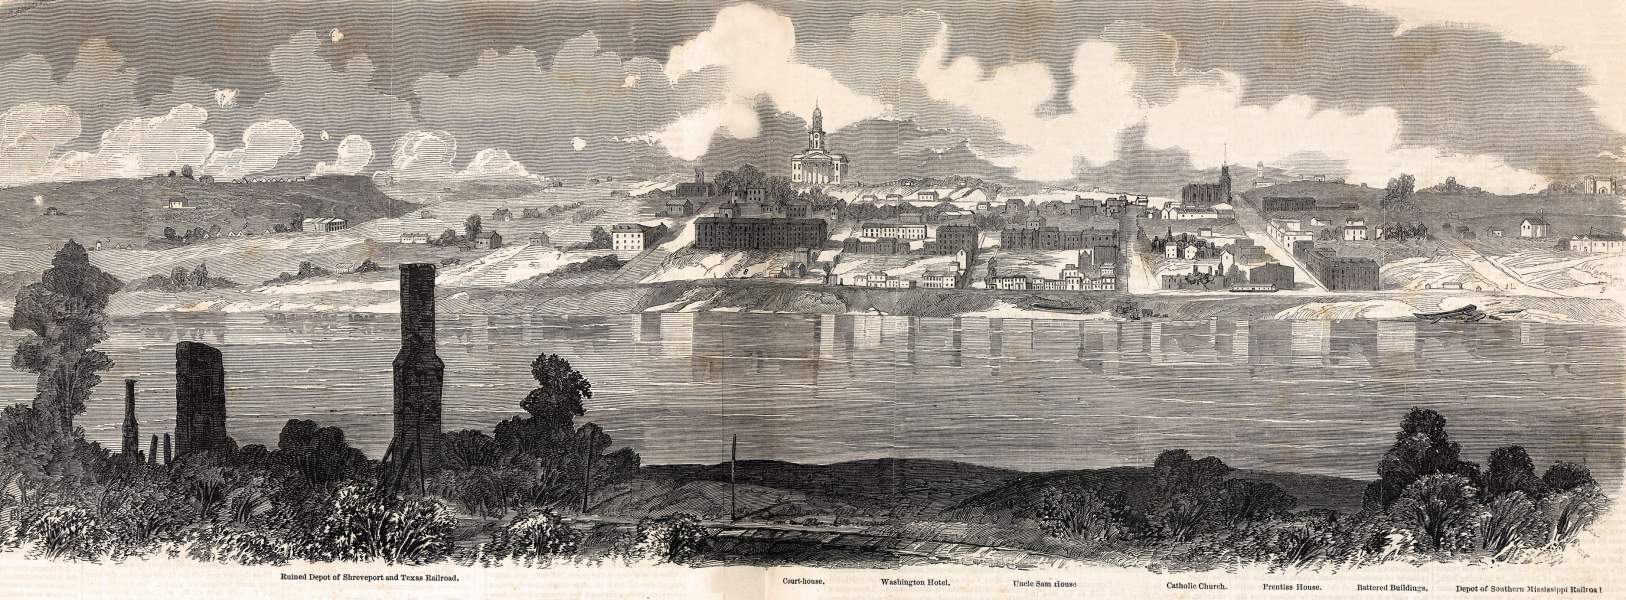 Vicksburg, Mississippi, June 1863, artist's impression, zoomable image